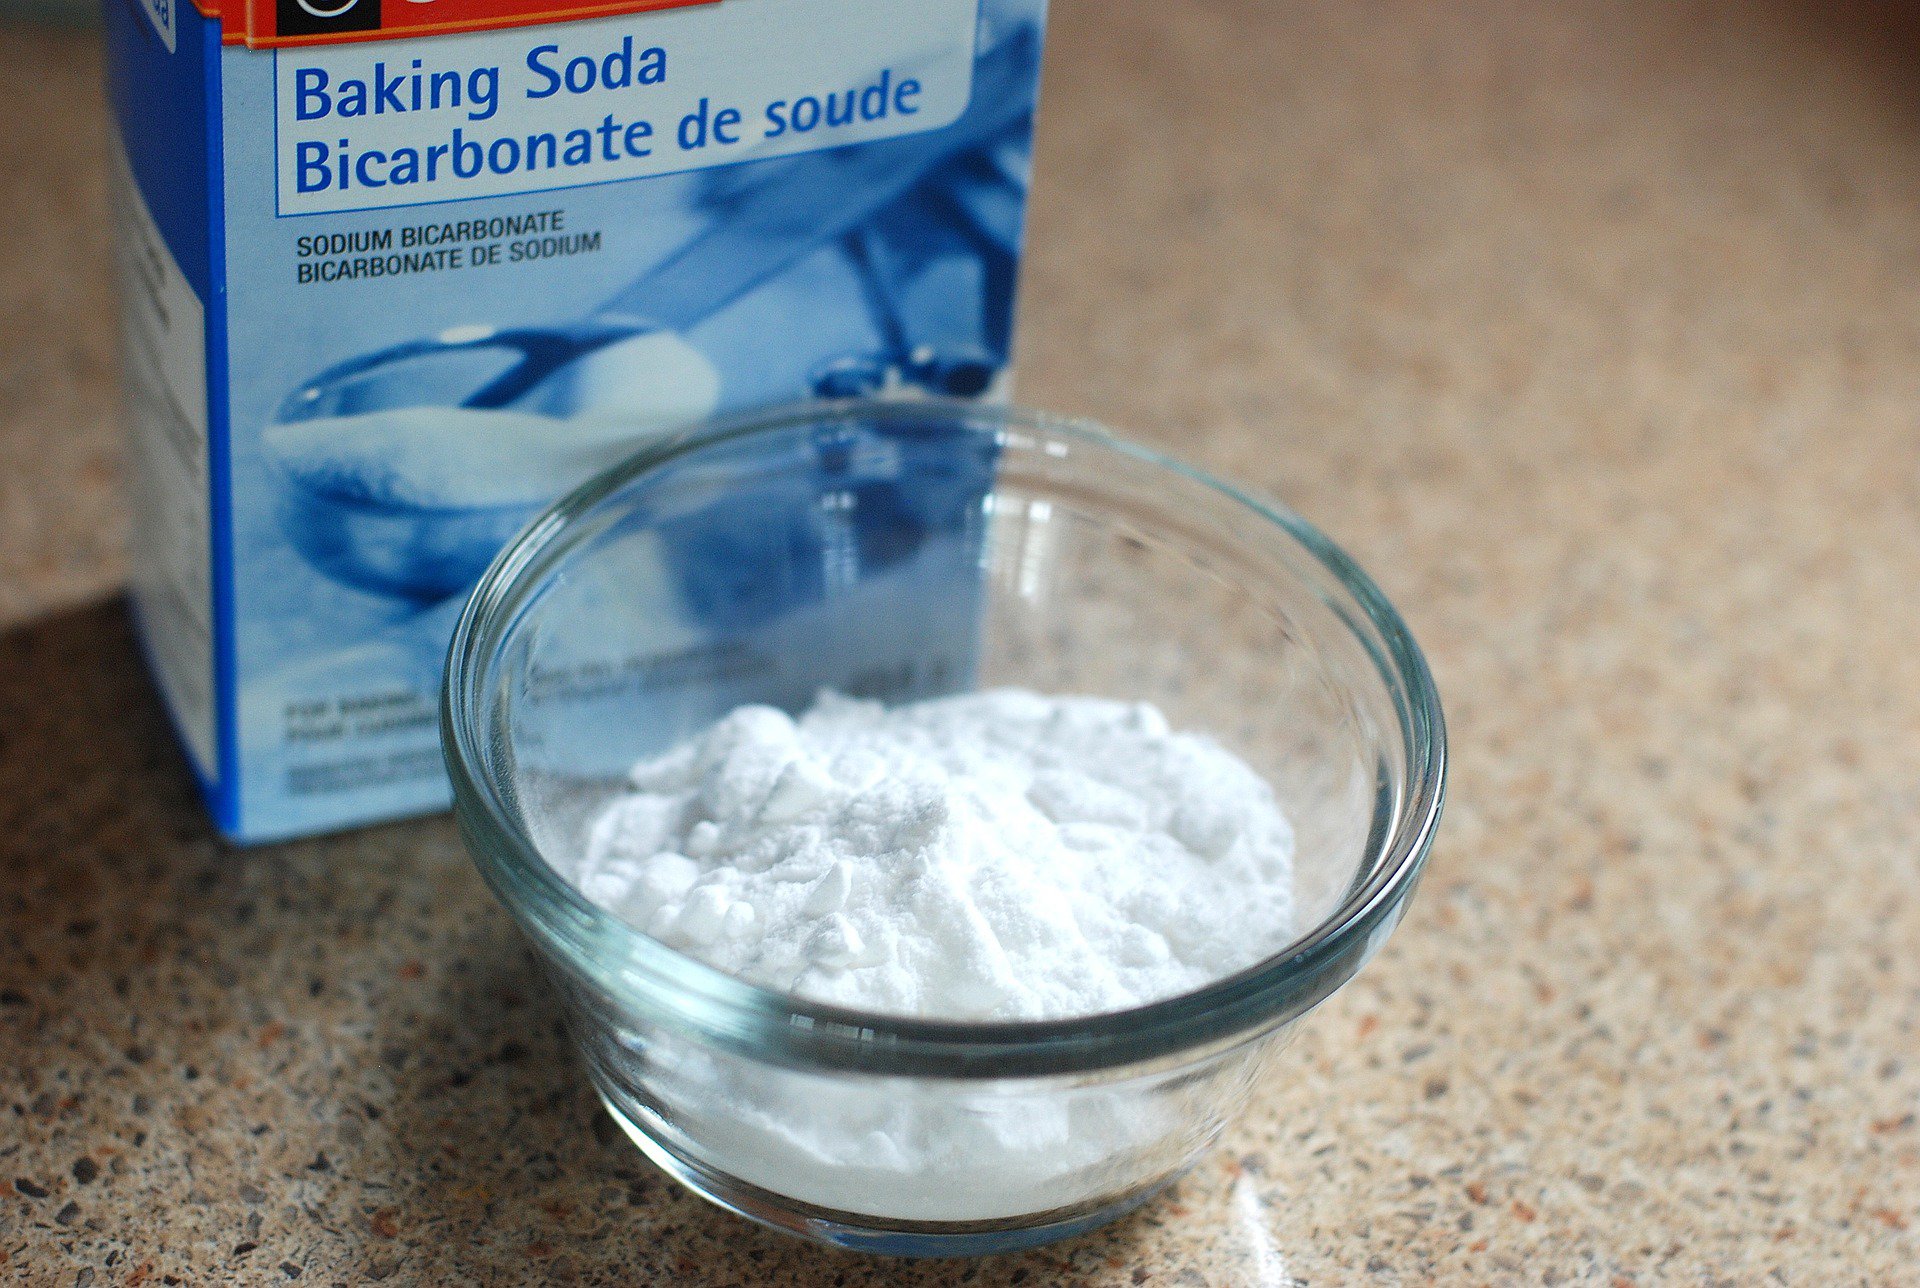 Does Baking Soda Absorb Moisture in Carpet?